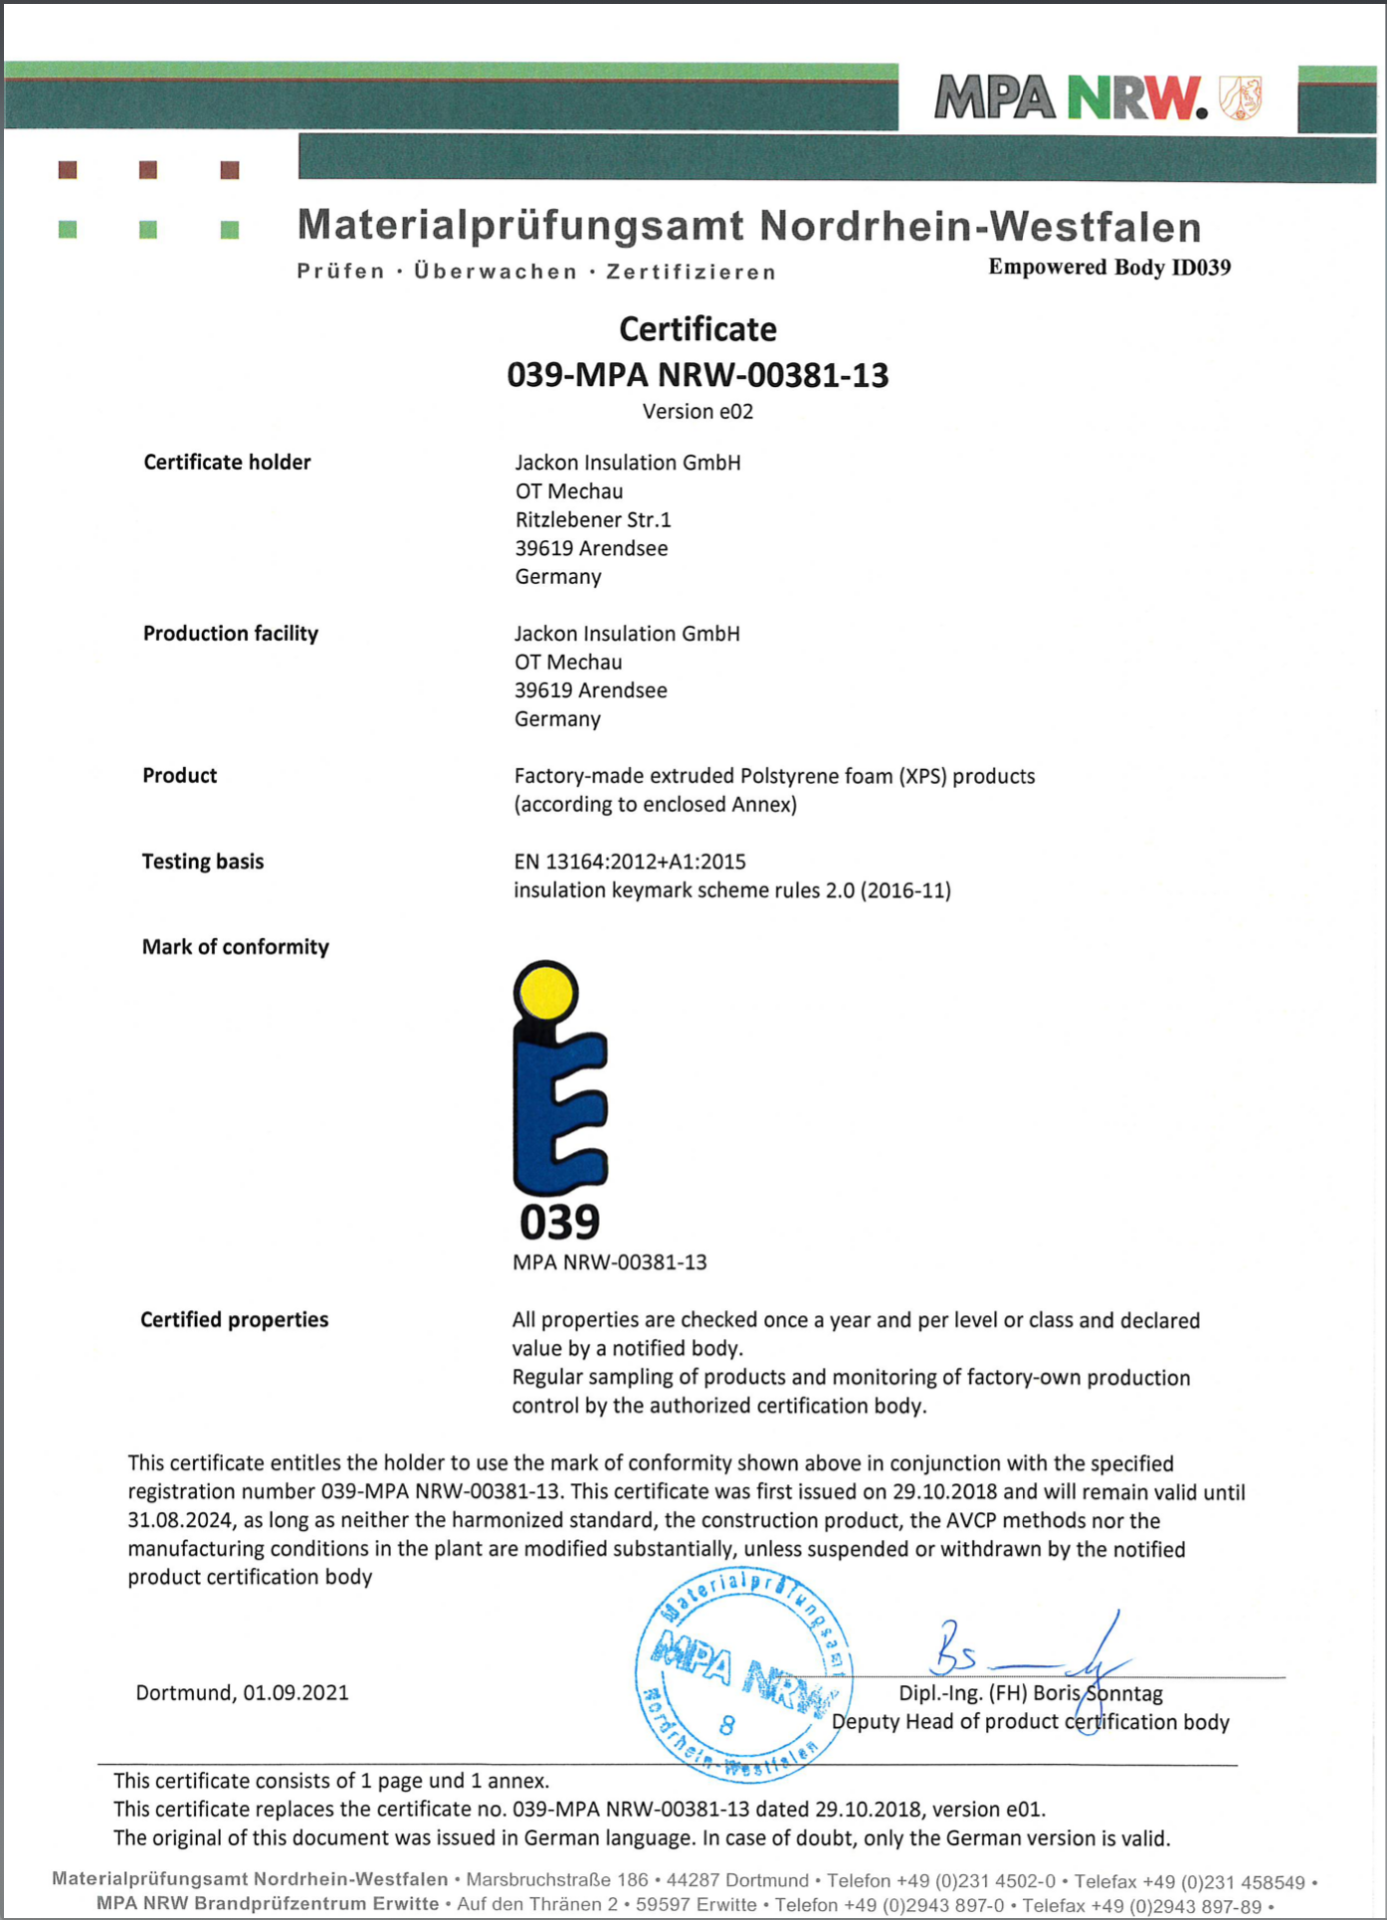 KEYMARK – independent verification – MECHAU factory – FT grades